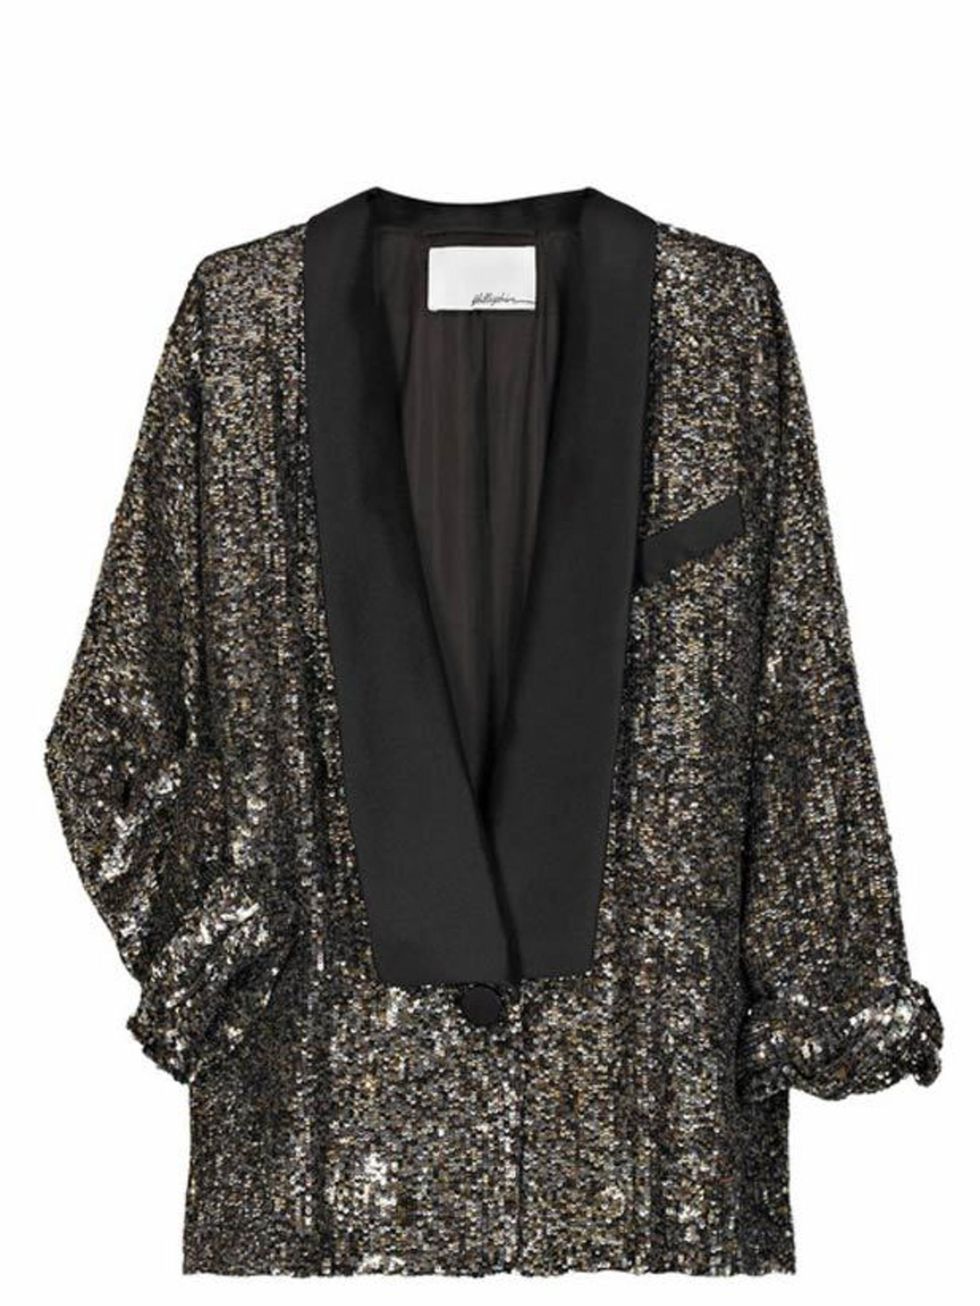 <p>Sequin jacket, £825, by 3.1 Phillip Lim at <a href="http://www.net-a-porter.com/Shop/Designers/31_Phillip_Lim/All">Net-a-Porter </a></p>